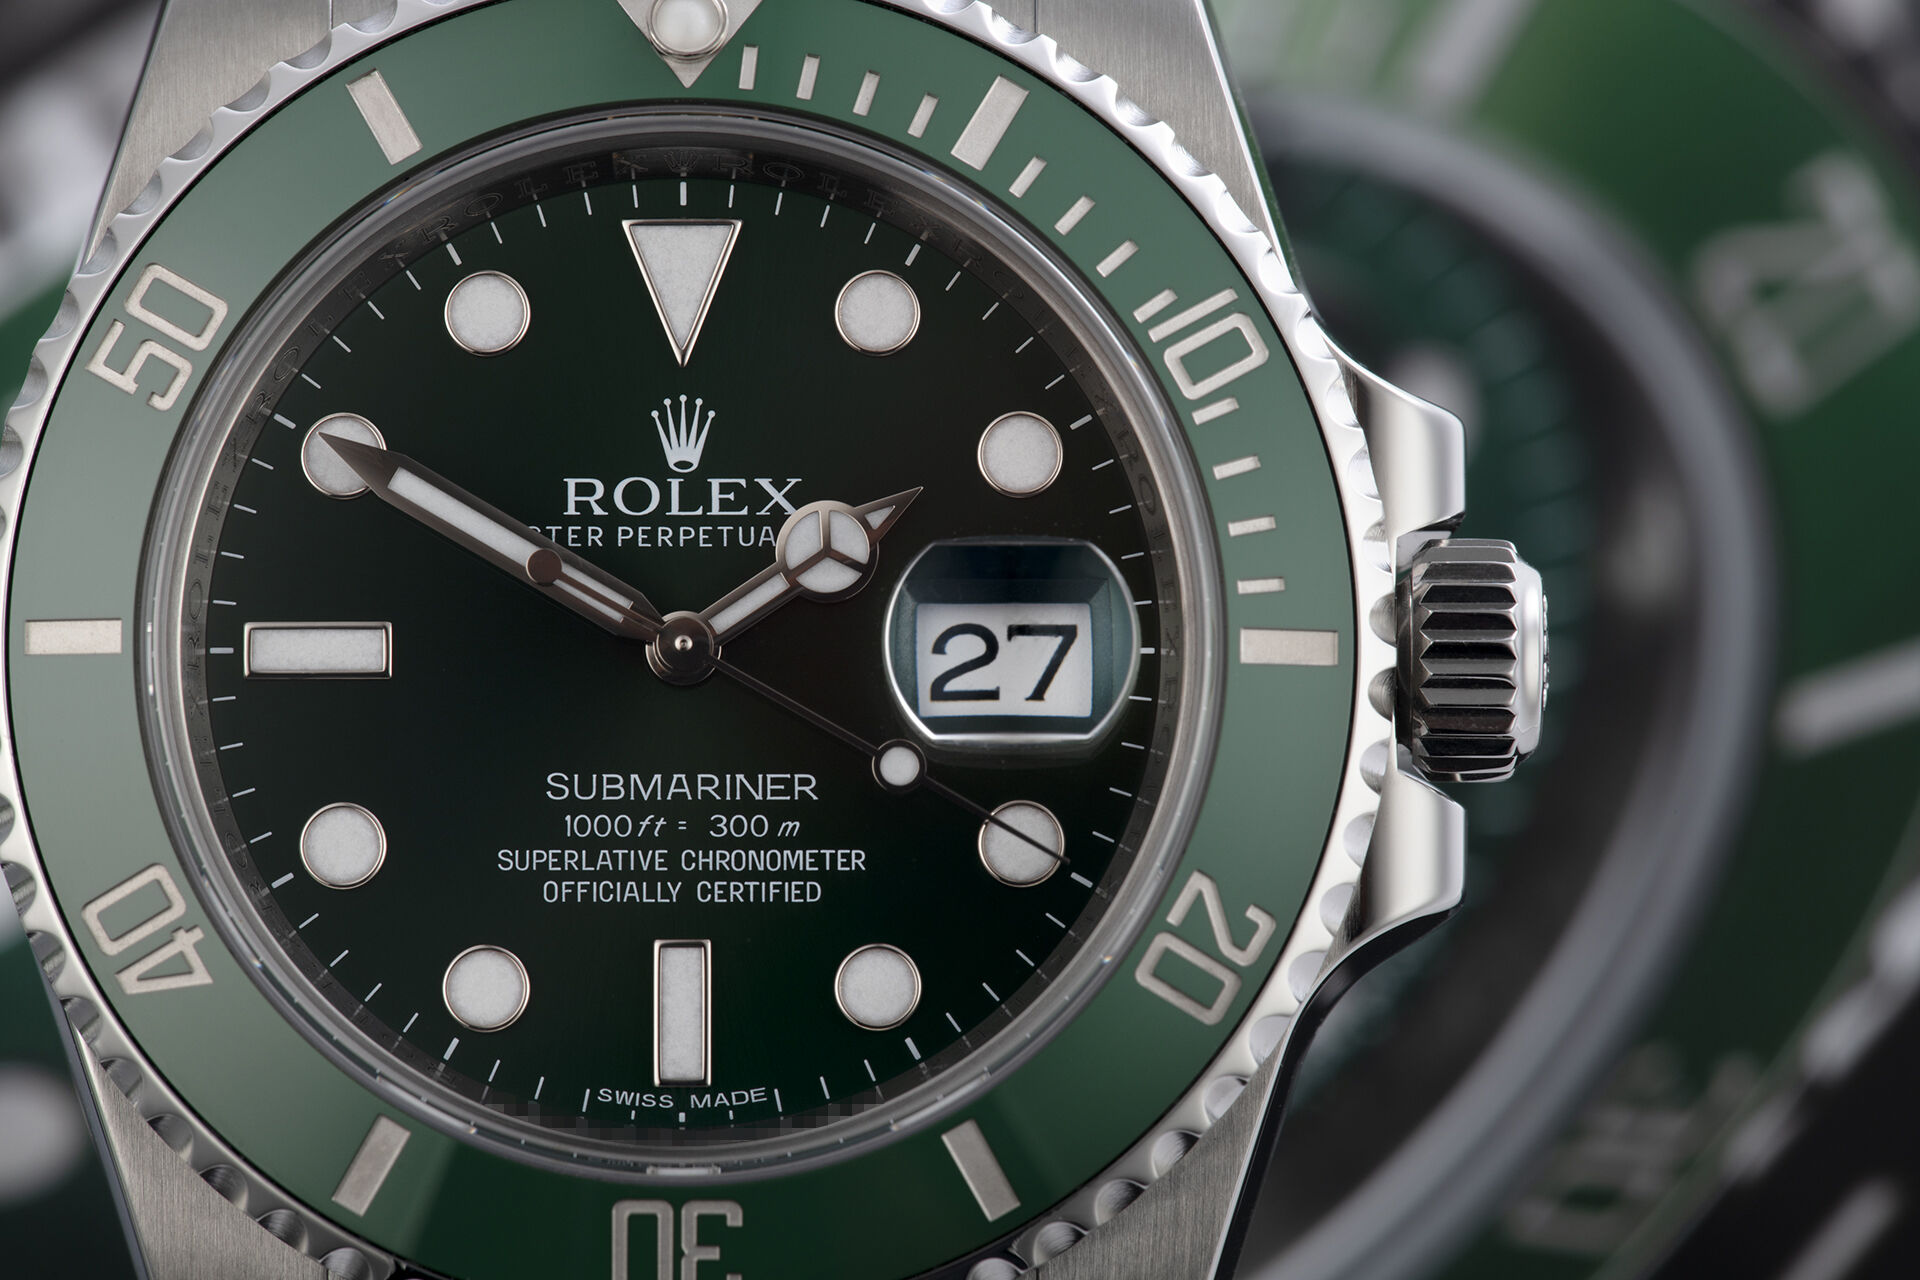 ref 116610LV | Box & Certificate | Rolex Submariner Date